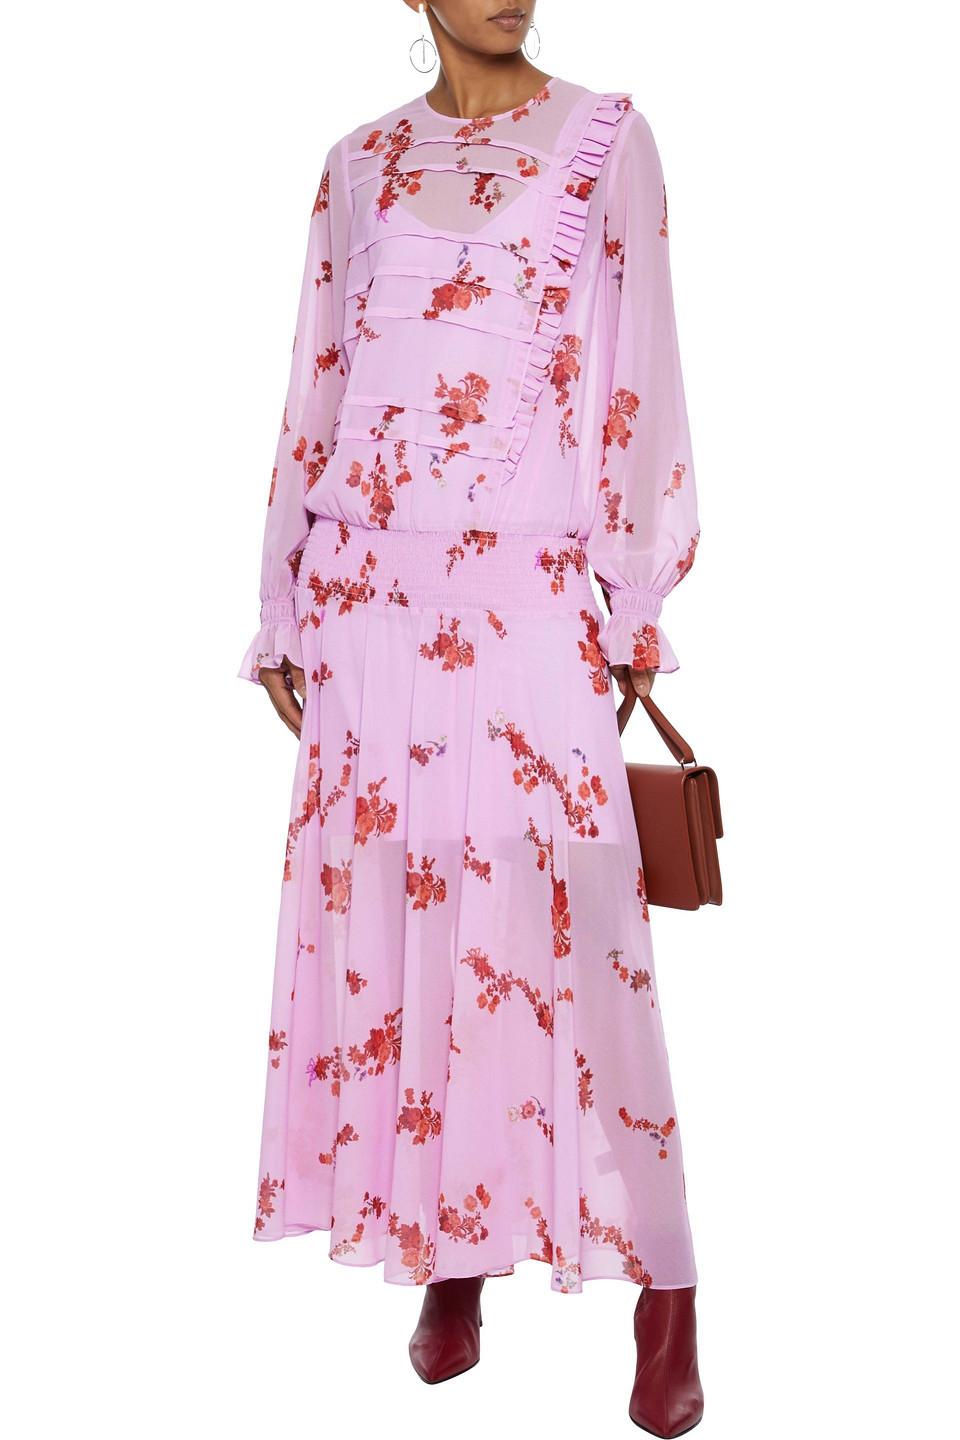 Preen Line Gilda Ruffle-trimmed Floral-print Chiffon Maxi Dress Pink - Lyst